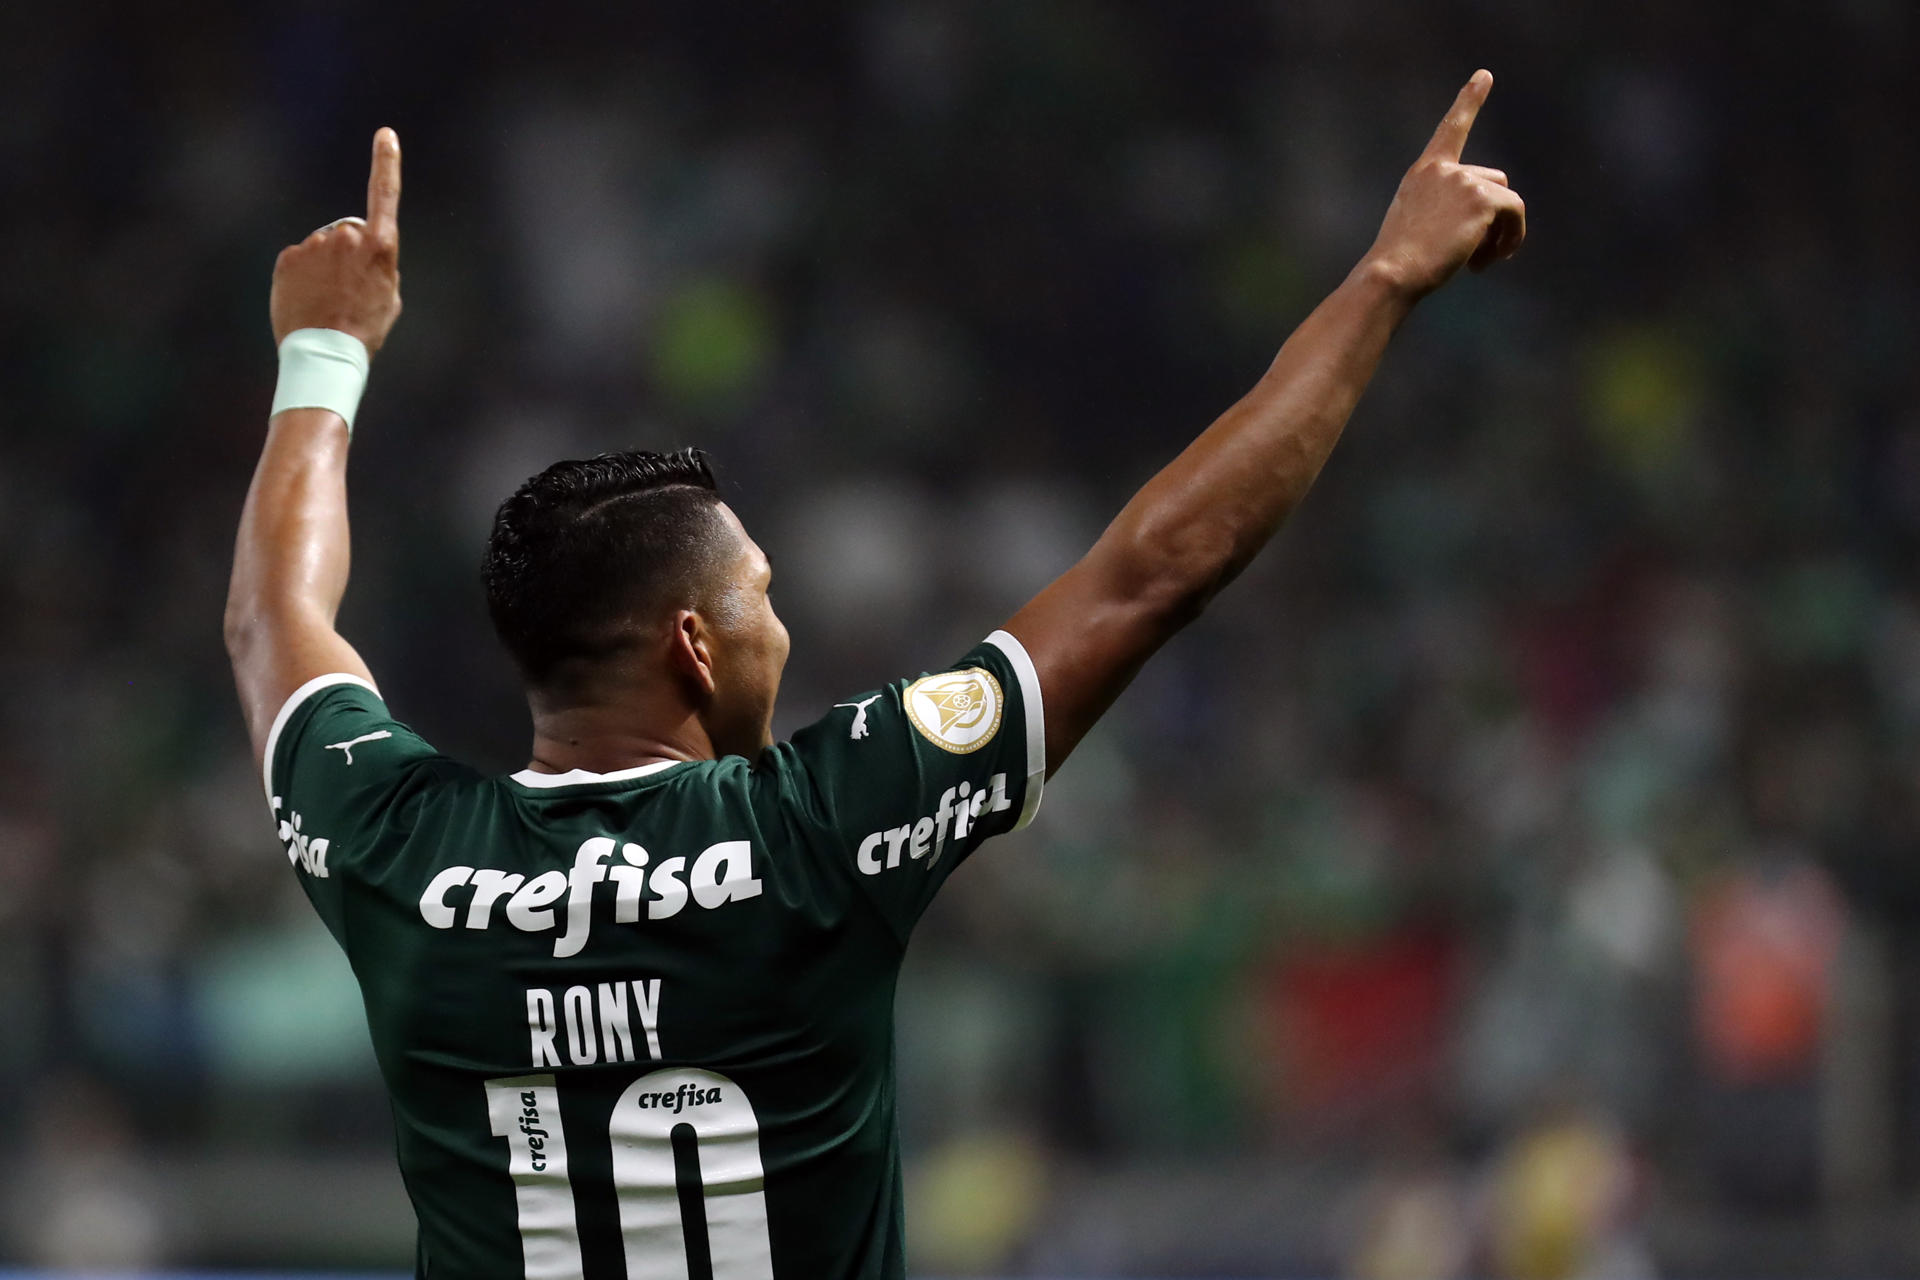 Roni de Palmeiras celebra un gol, en una fotografía de archivo. EFE/Sebastiao Moreira